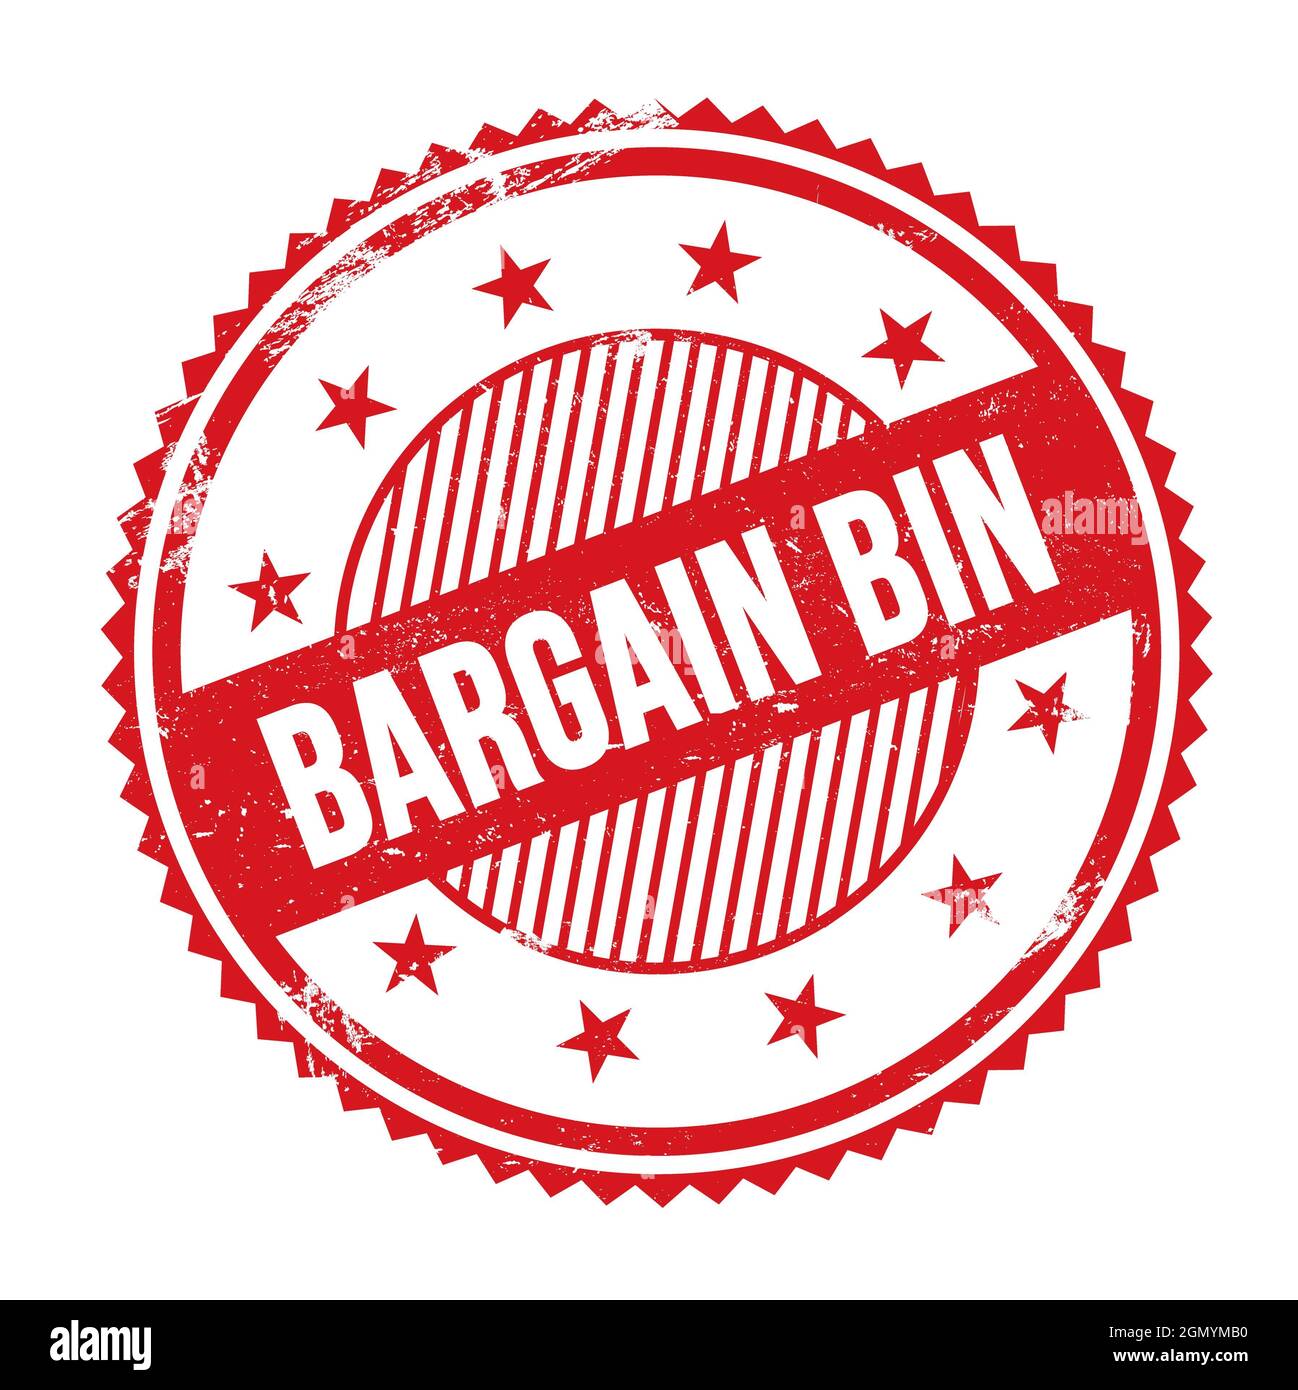 BARGAIN BIN words written on red round stamp sign Stock Photo